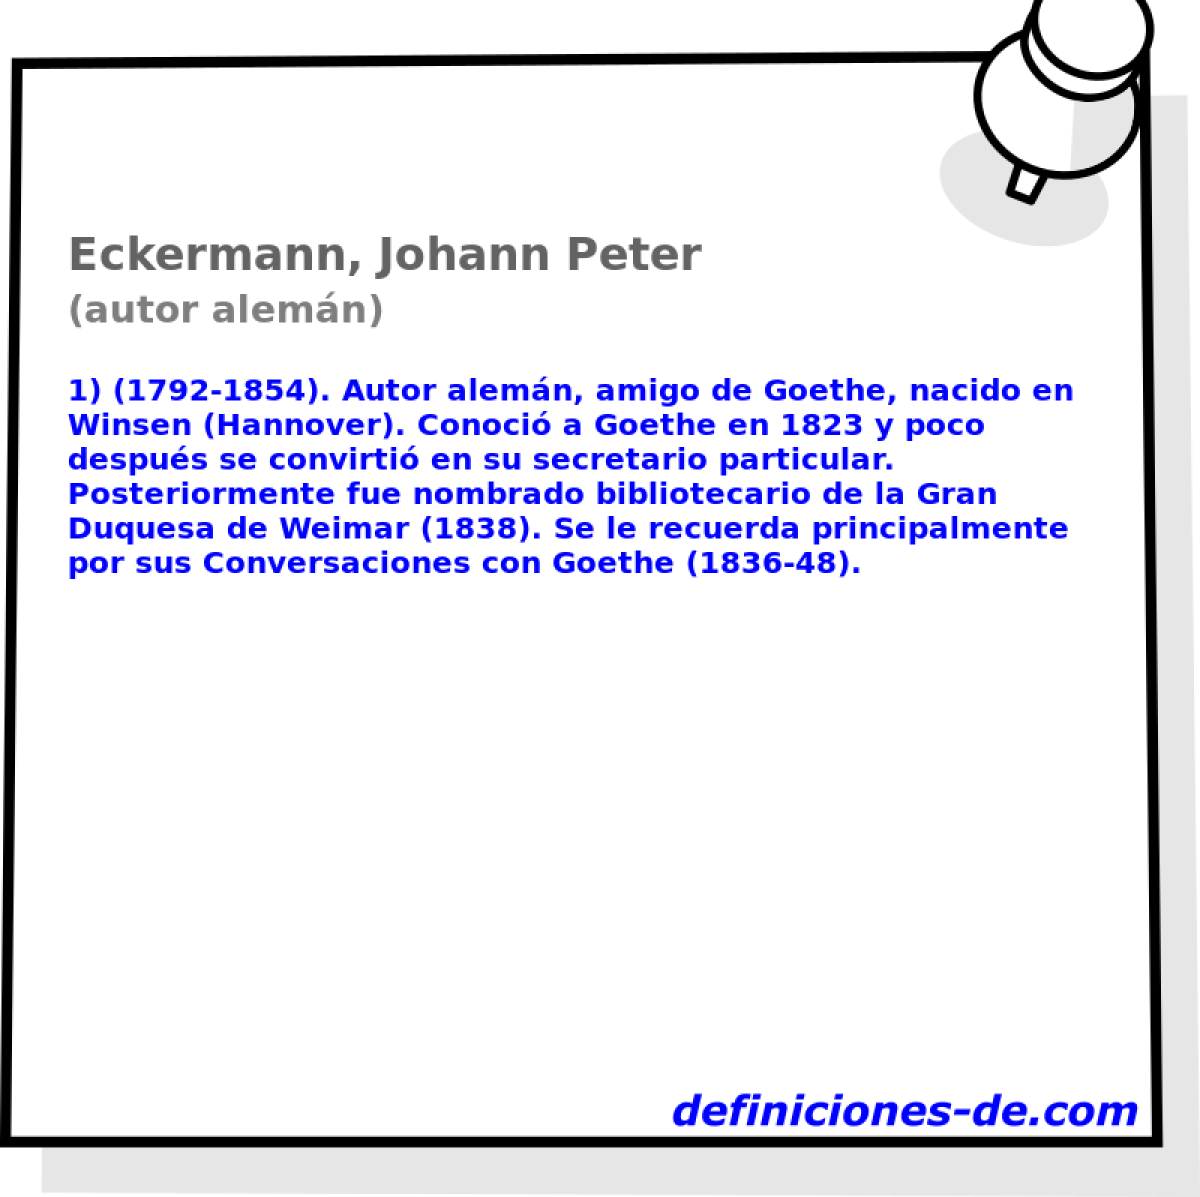 Eckermann, Johann Peter (autor alemn)